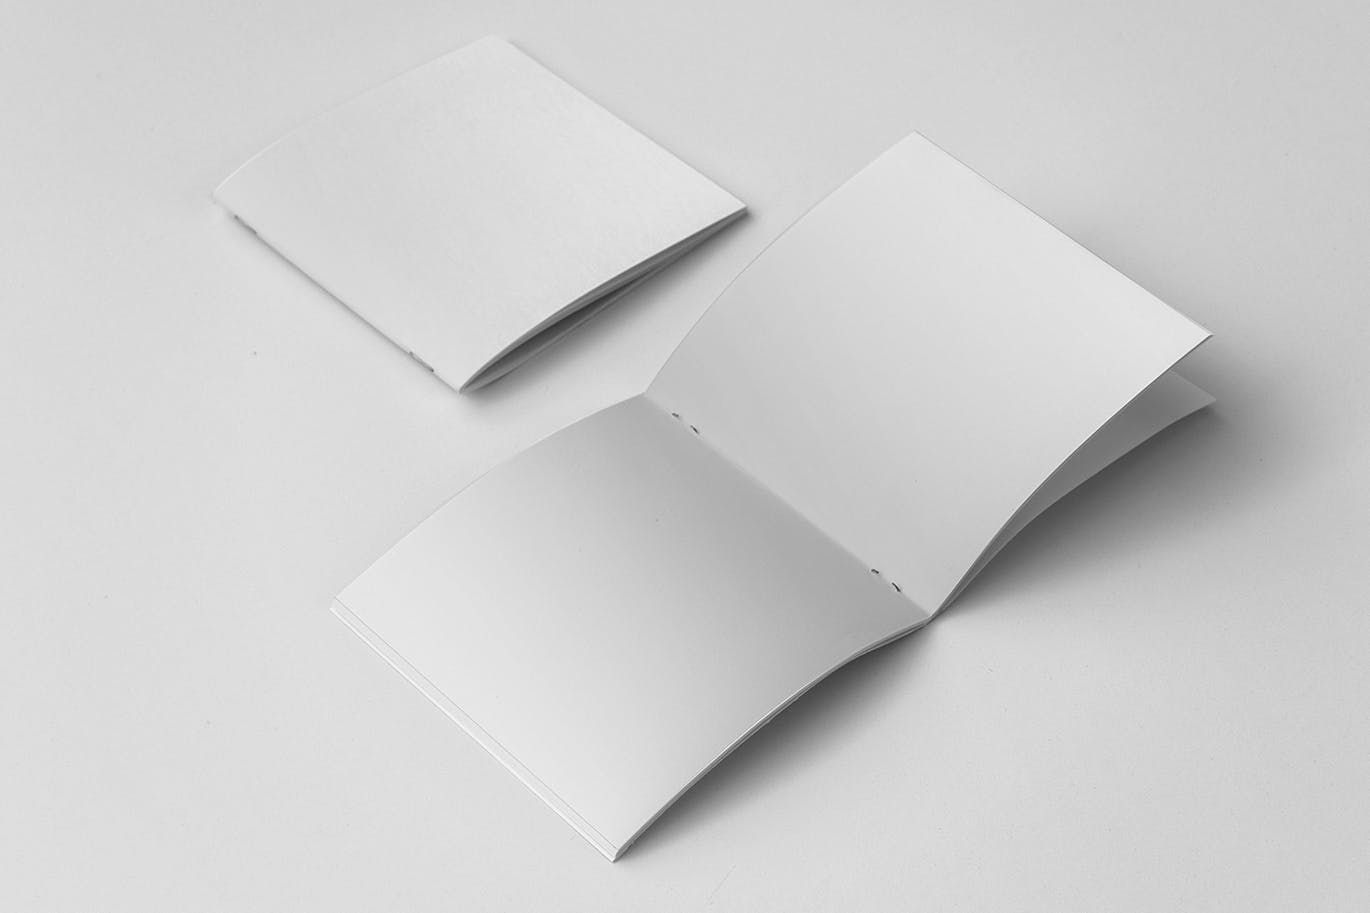 方形画册产品手册封面&内页设计效果图样机第一素材精选 Square Brochure Cover & Open Pages Mockup插图(1)